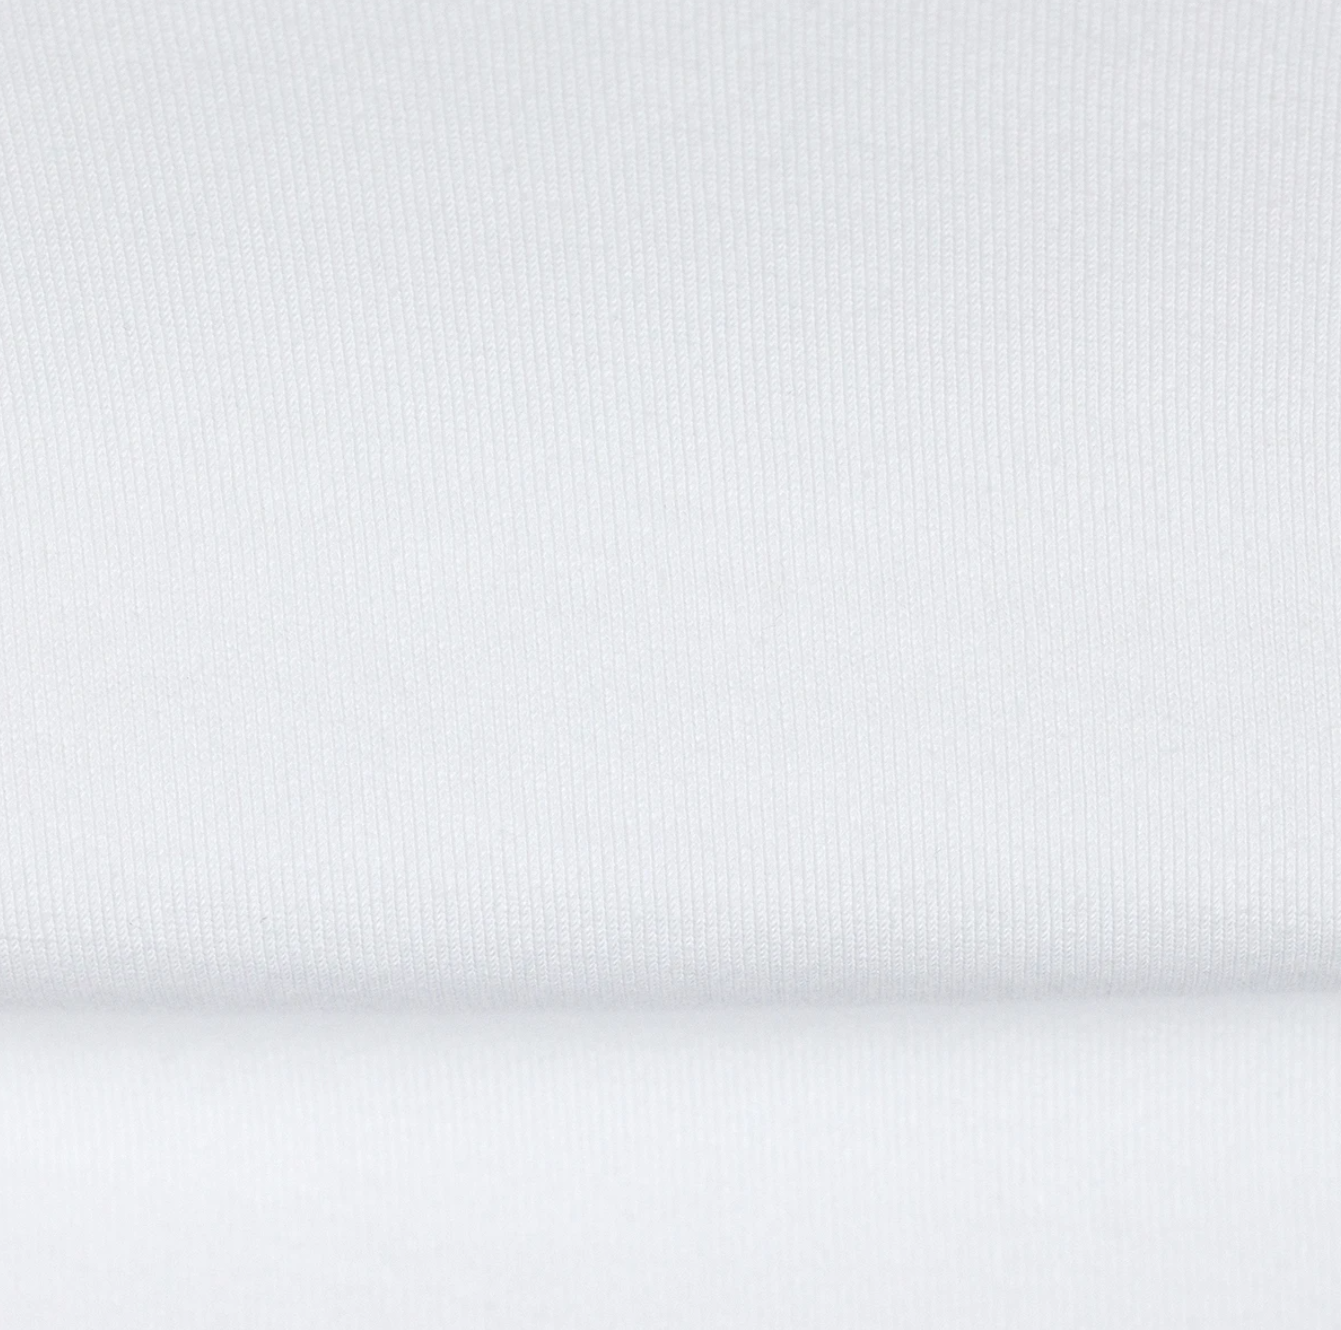 PURPLE ALIEN (BACK PRINT) - Unisex Oversized T-shirt